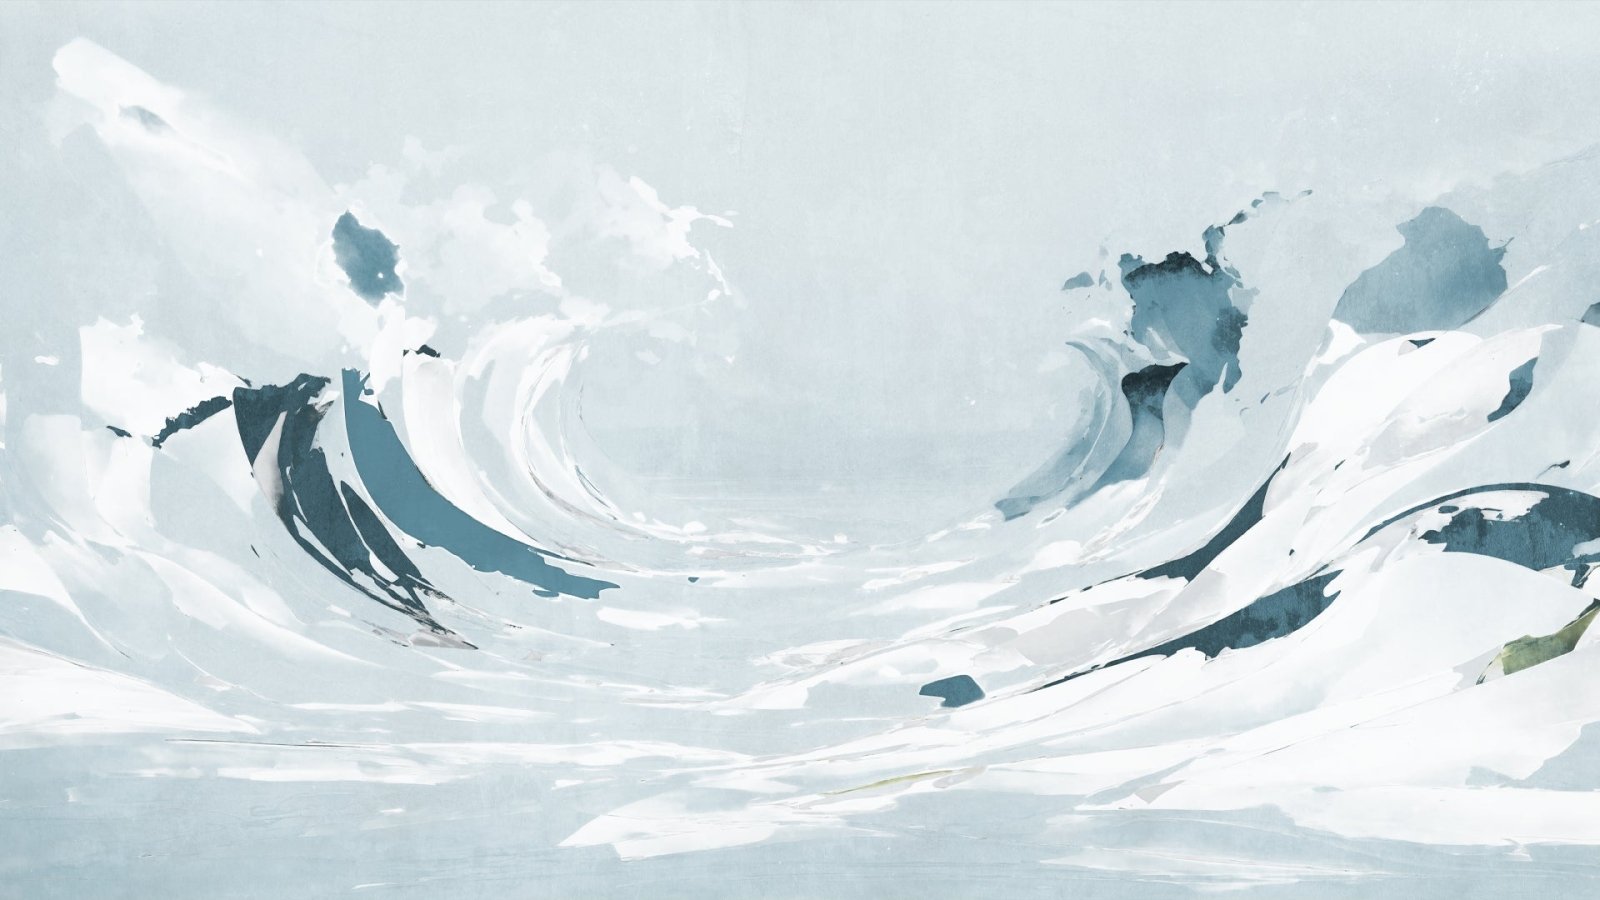 Oceanic Swirl-Peel and Stick Wallpaper